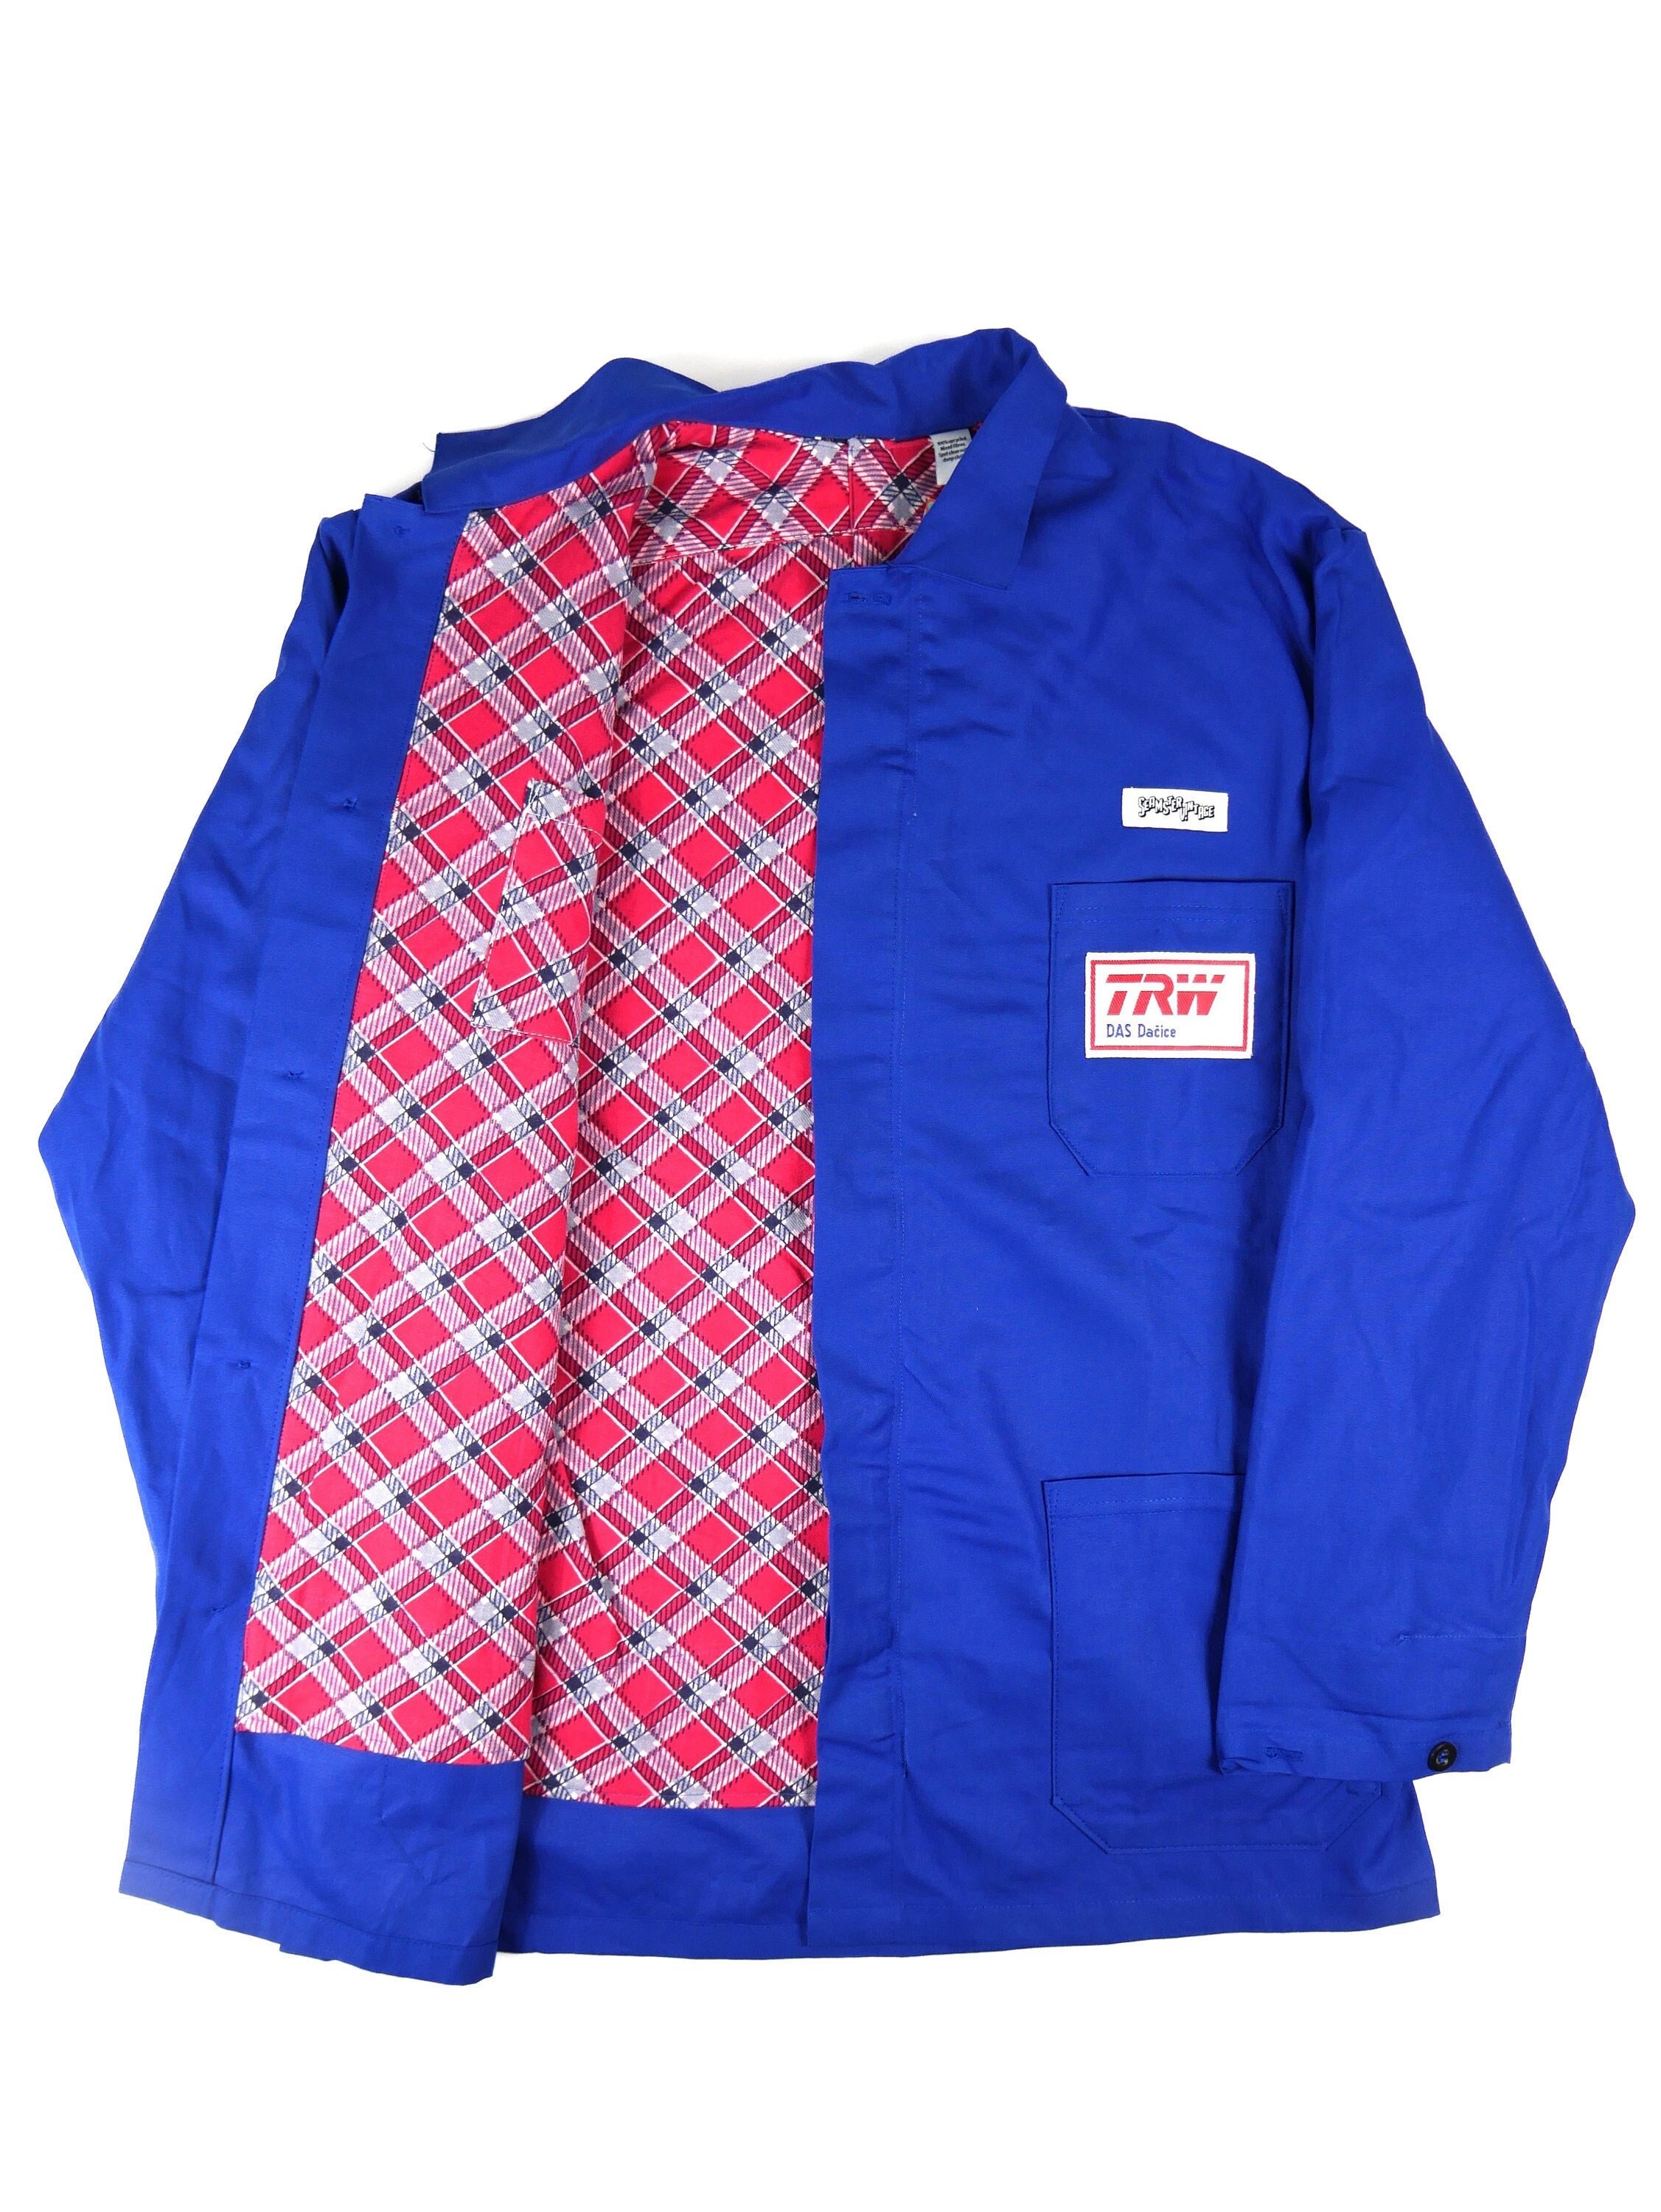 Boxy Checkerboard Melton Pu Varsity Jacket